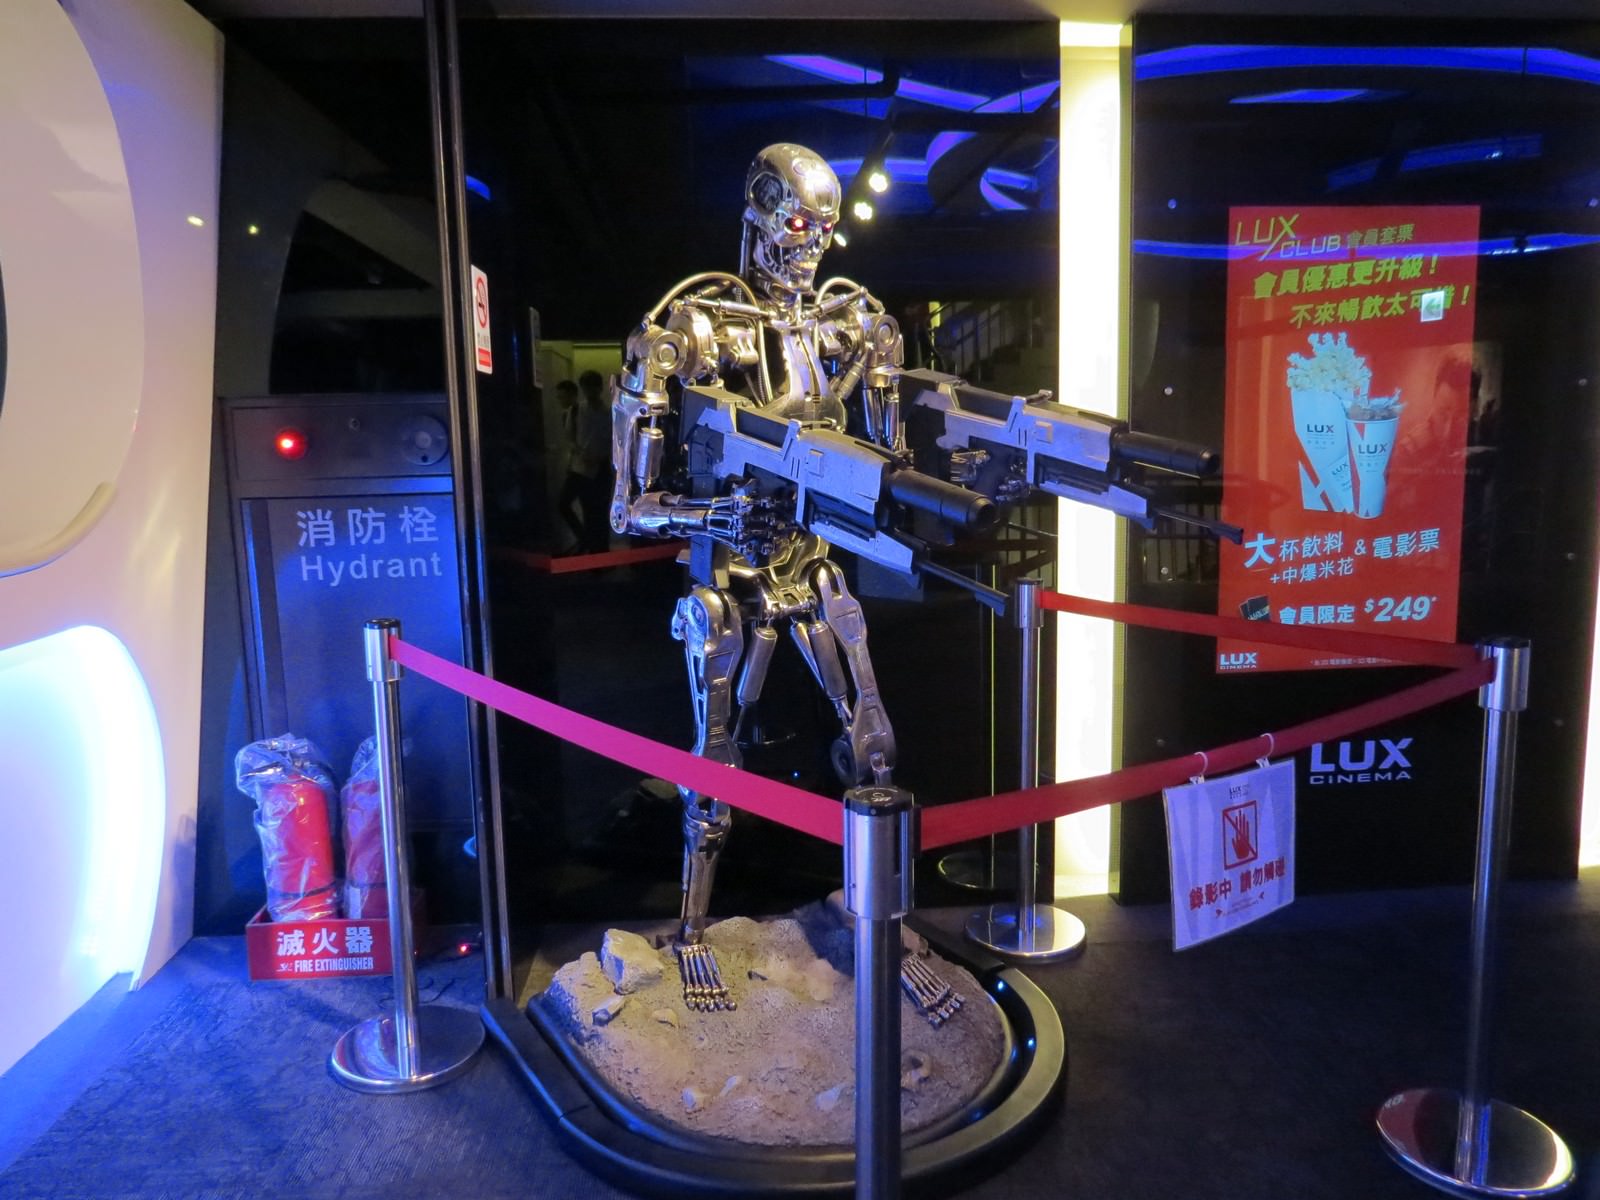 Movie, The Terminator(美國, 1985年) / 魔鬼終結者(台灣) / 未來戰士(香港) / 终结者(網路), 電影宣傳模型